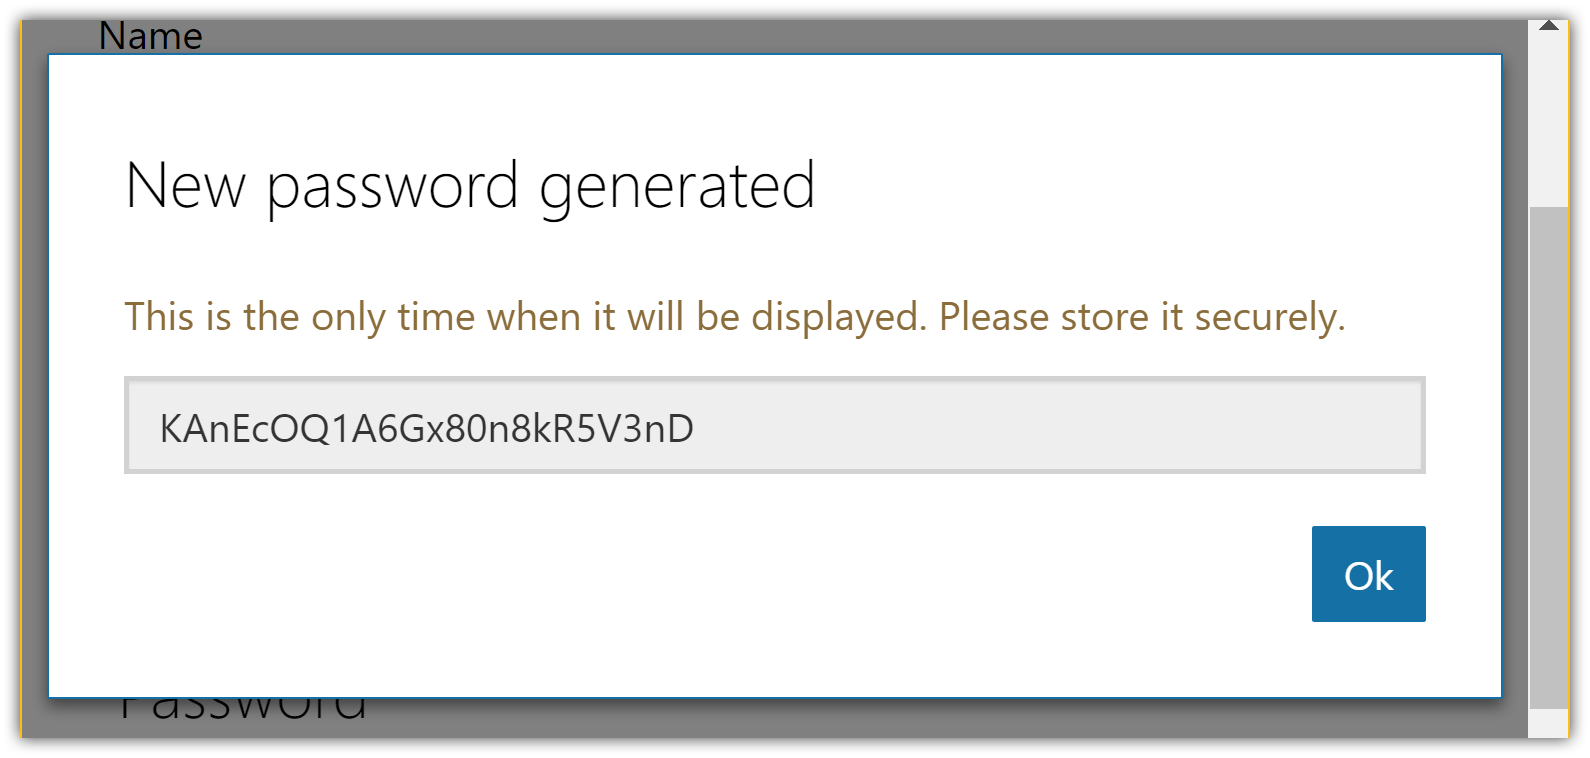 New password generated dialog